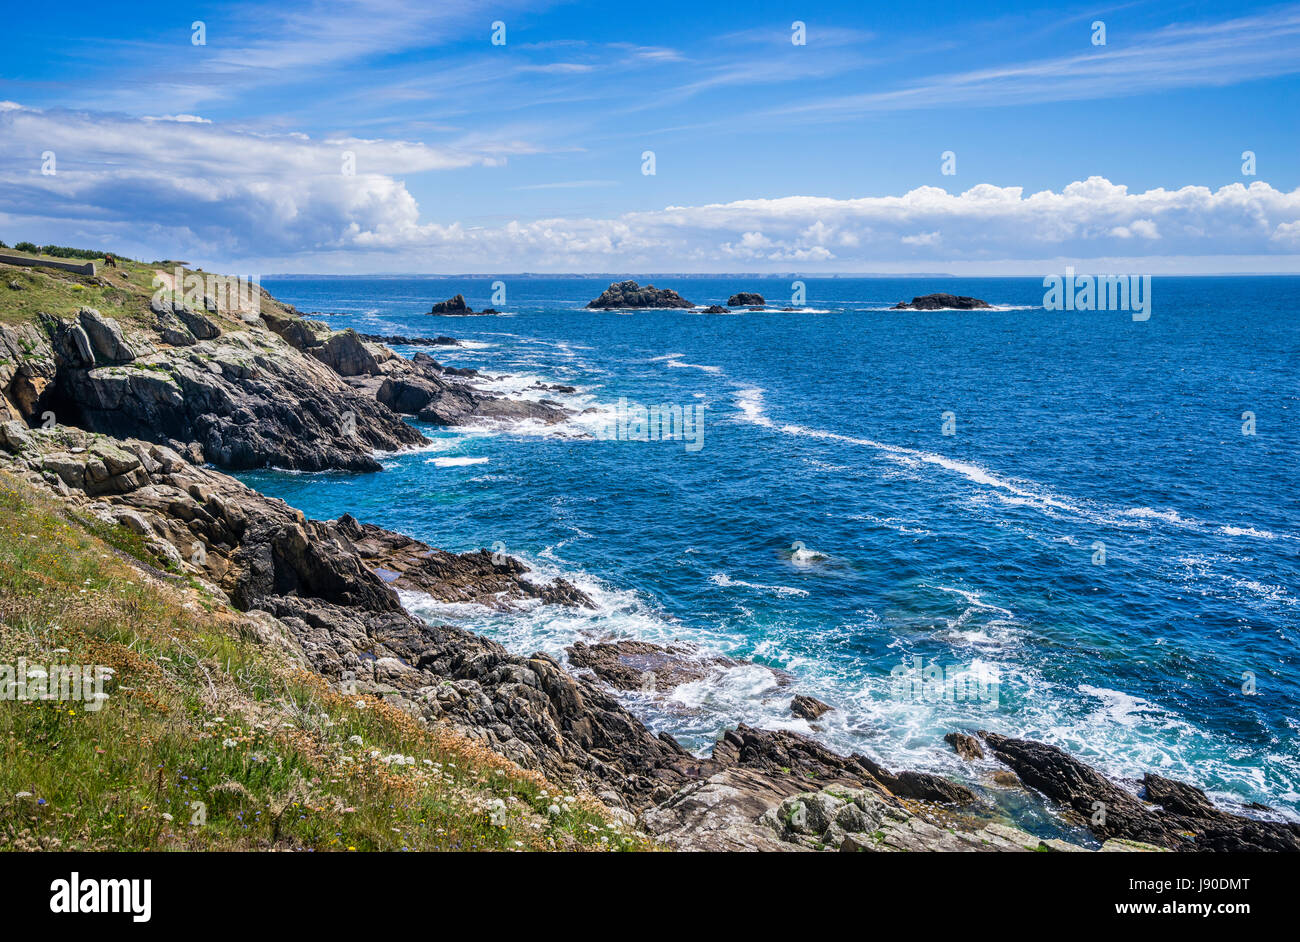 France, Brittany, Finistére department, coastal landscape at Pointe Sant-Mathieu Stock Photo